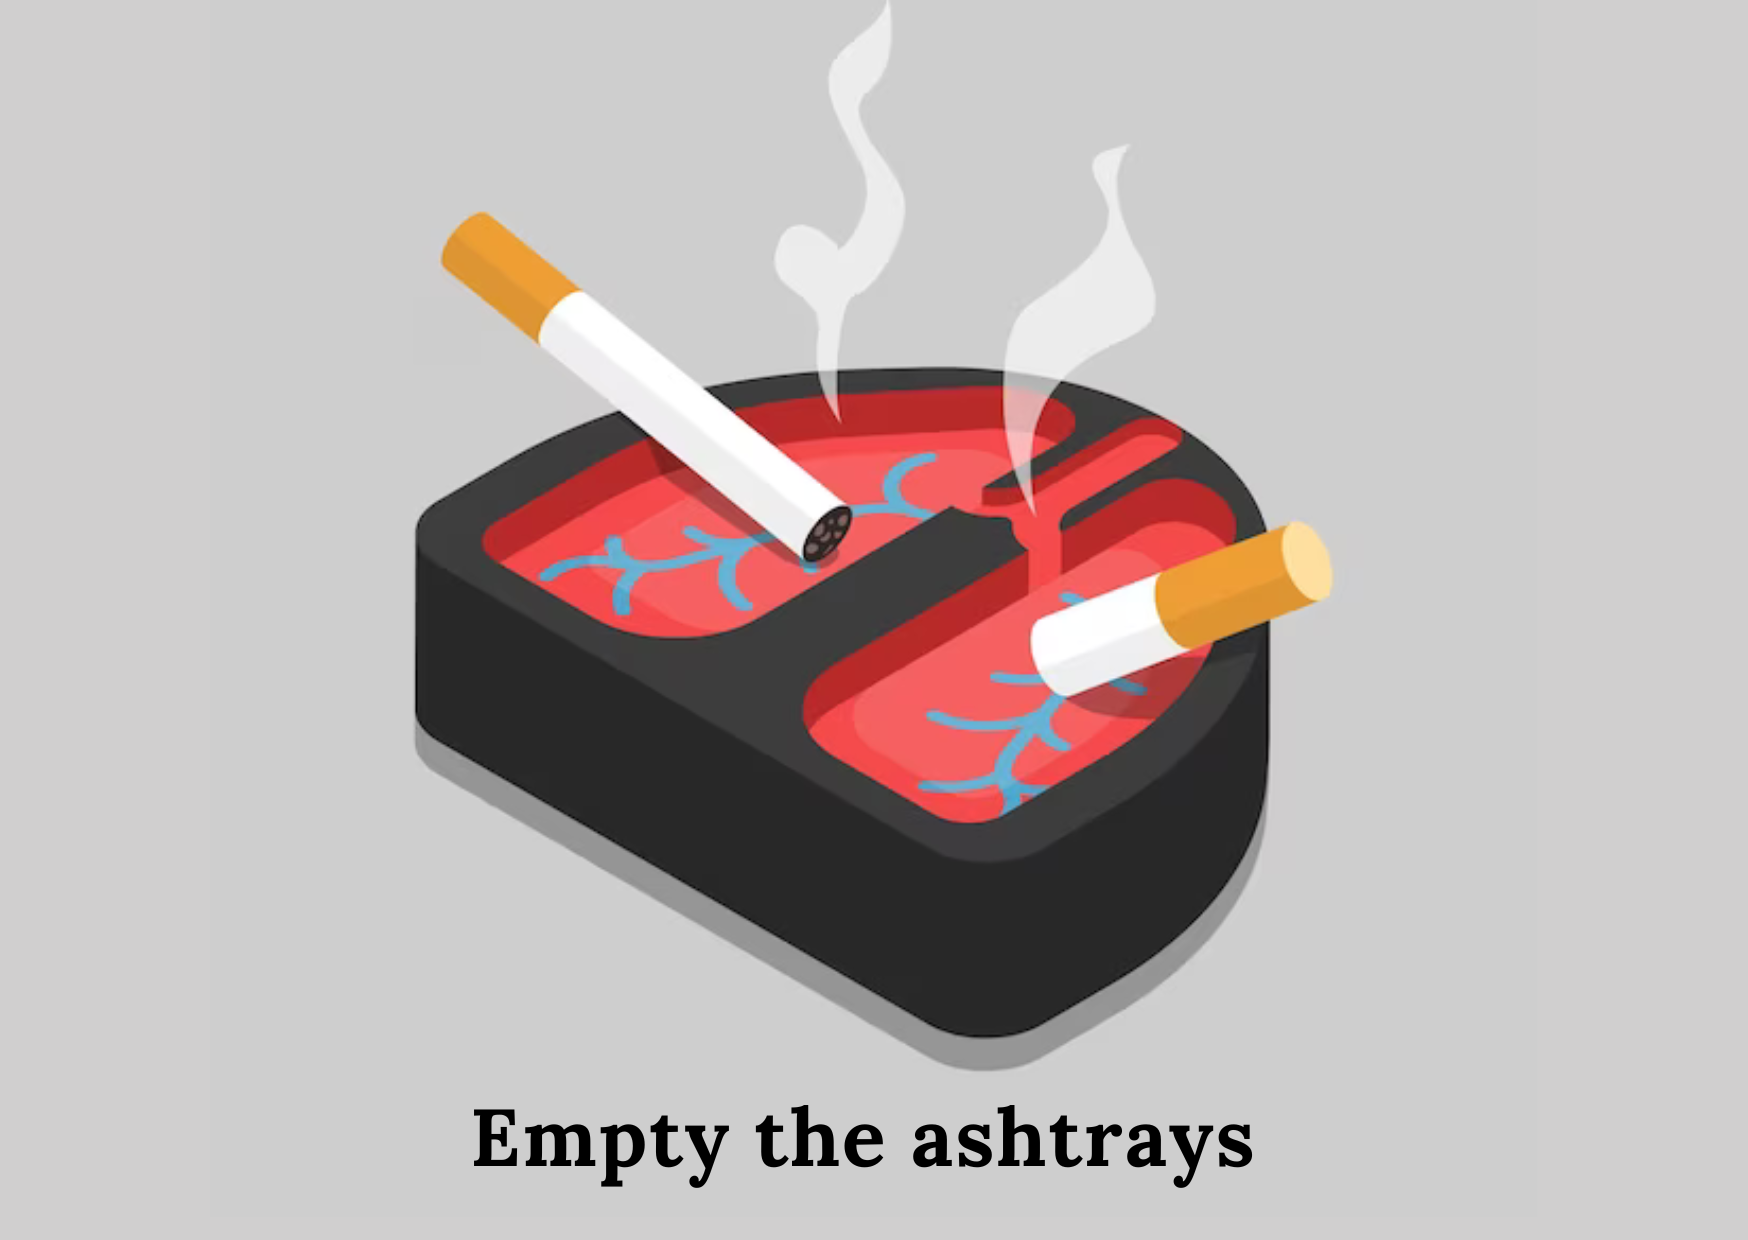 2. Empty the ashtrays